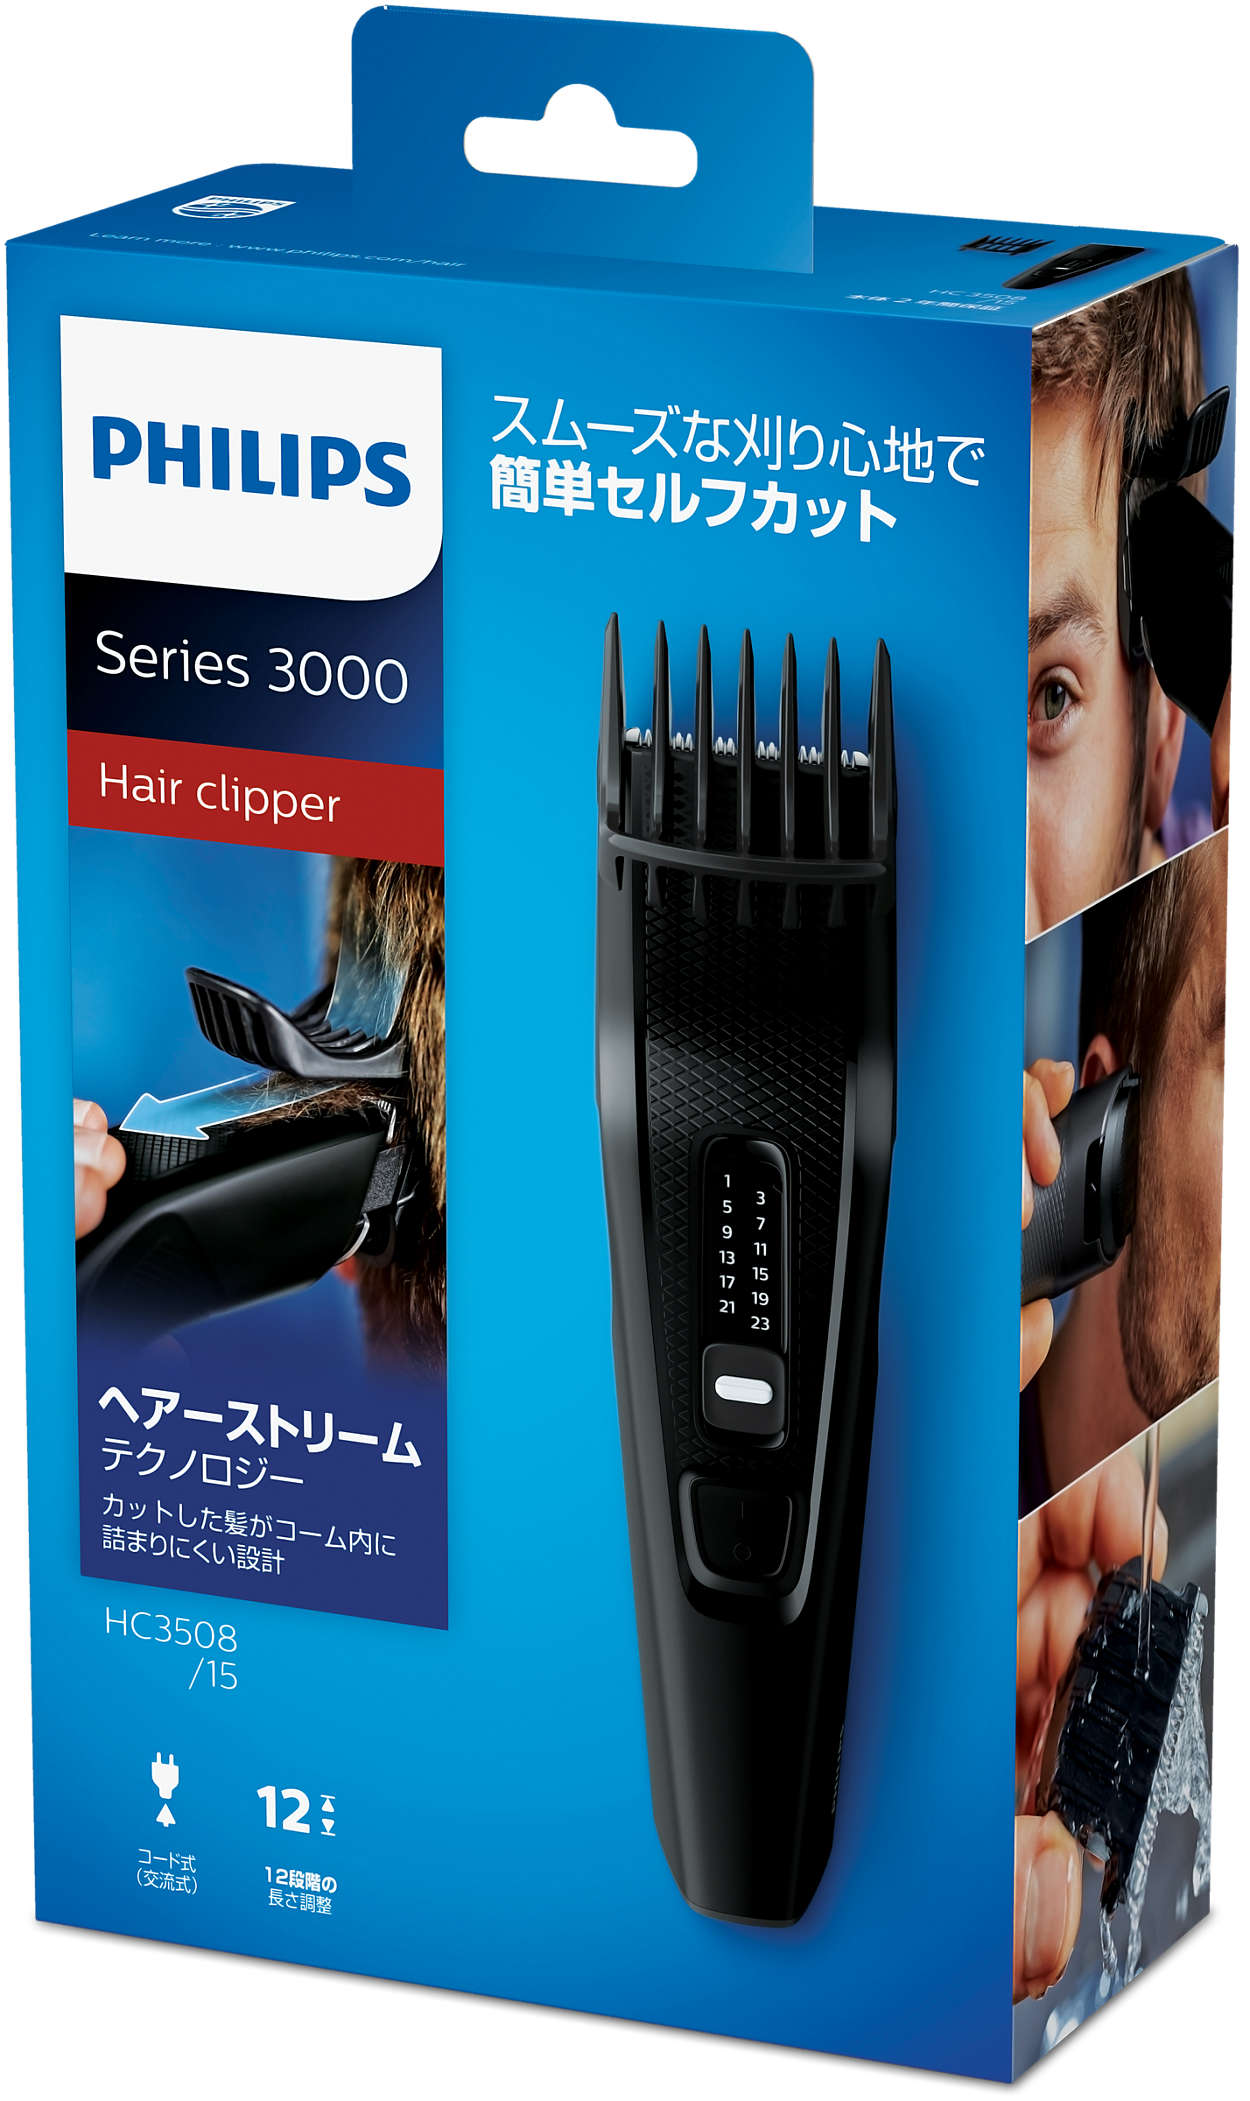 Hairclipper series 3000 ヘアーカッター HC3508/15 | Philips